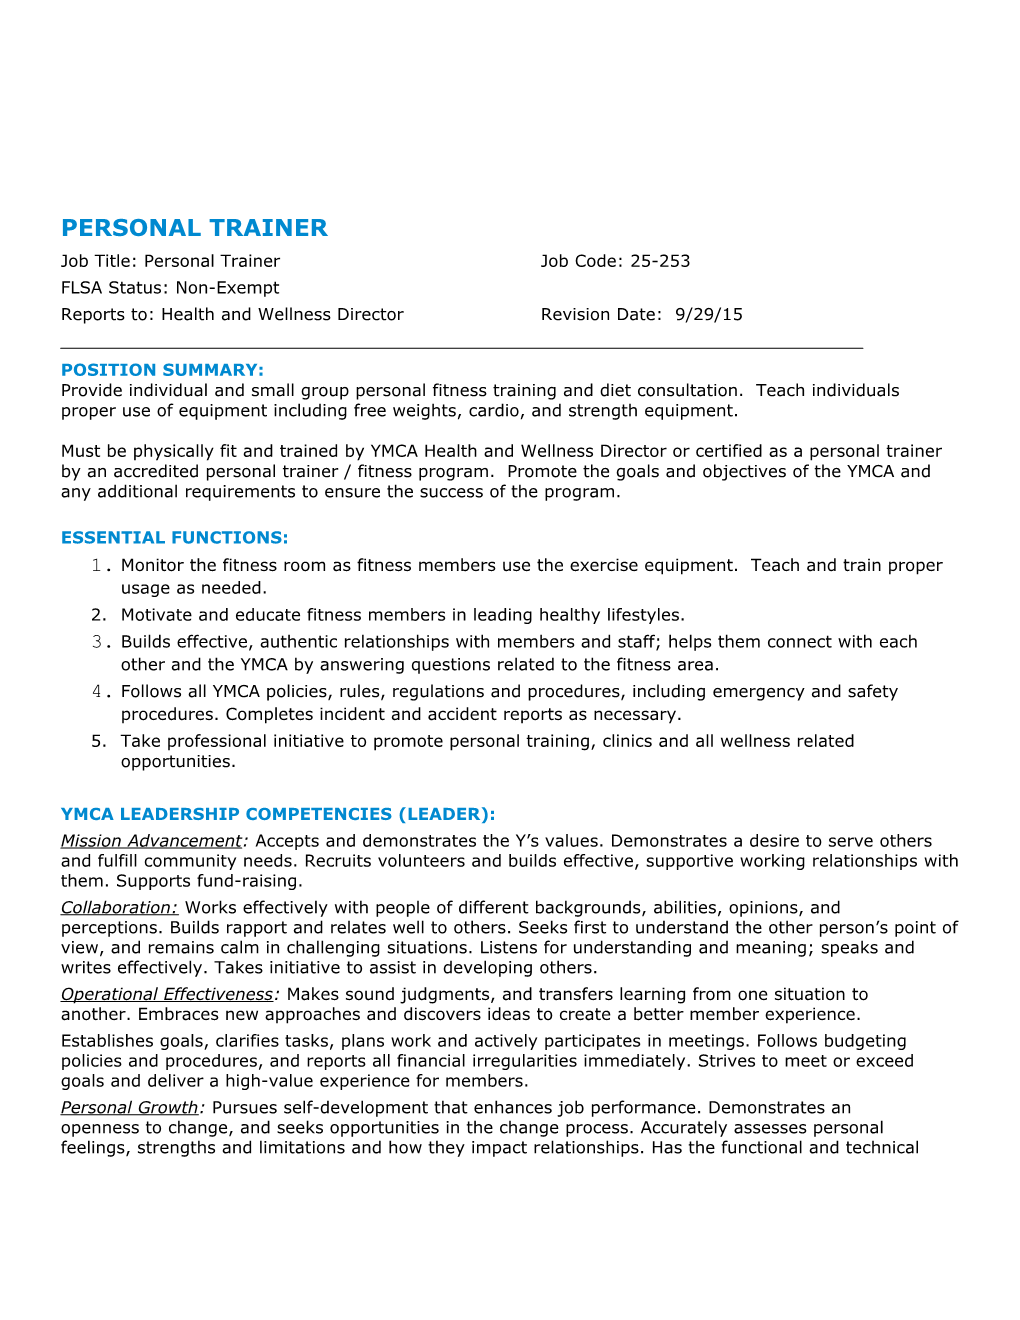 Job Title: Personal Trainerjob Code: 25-253